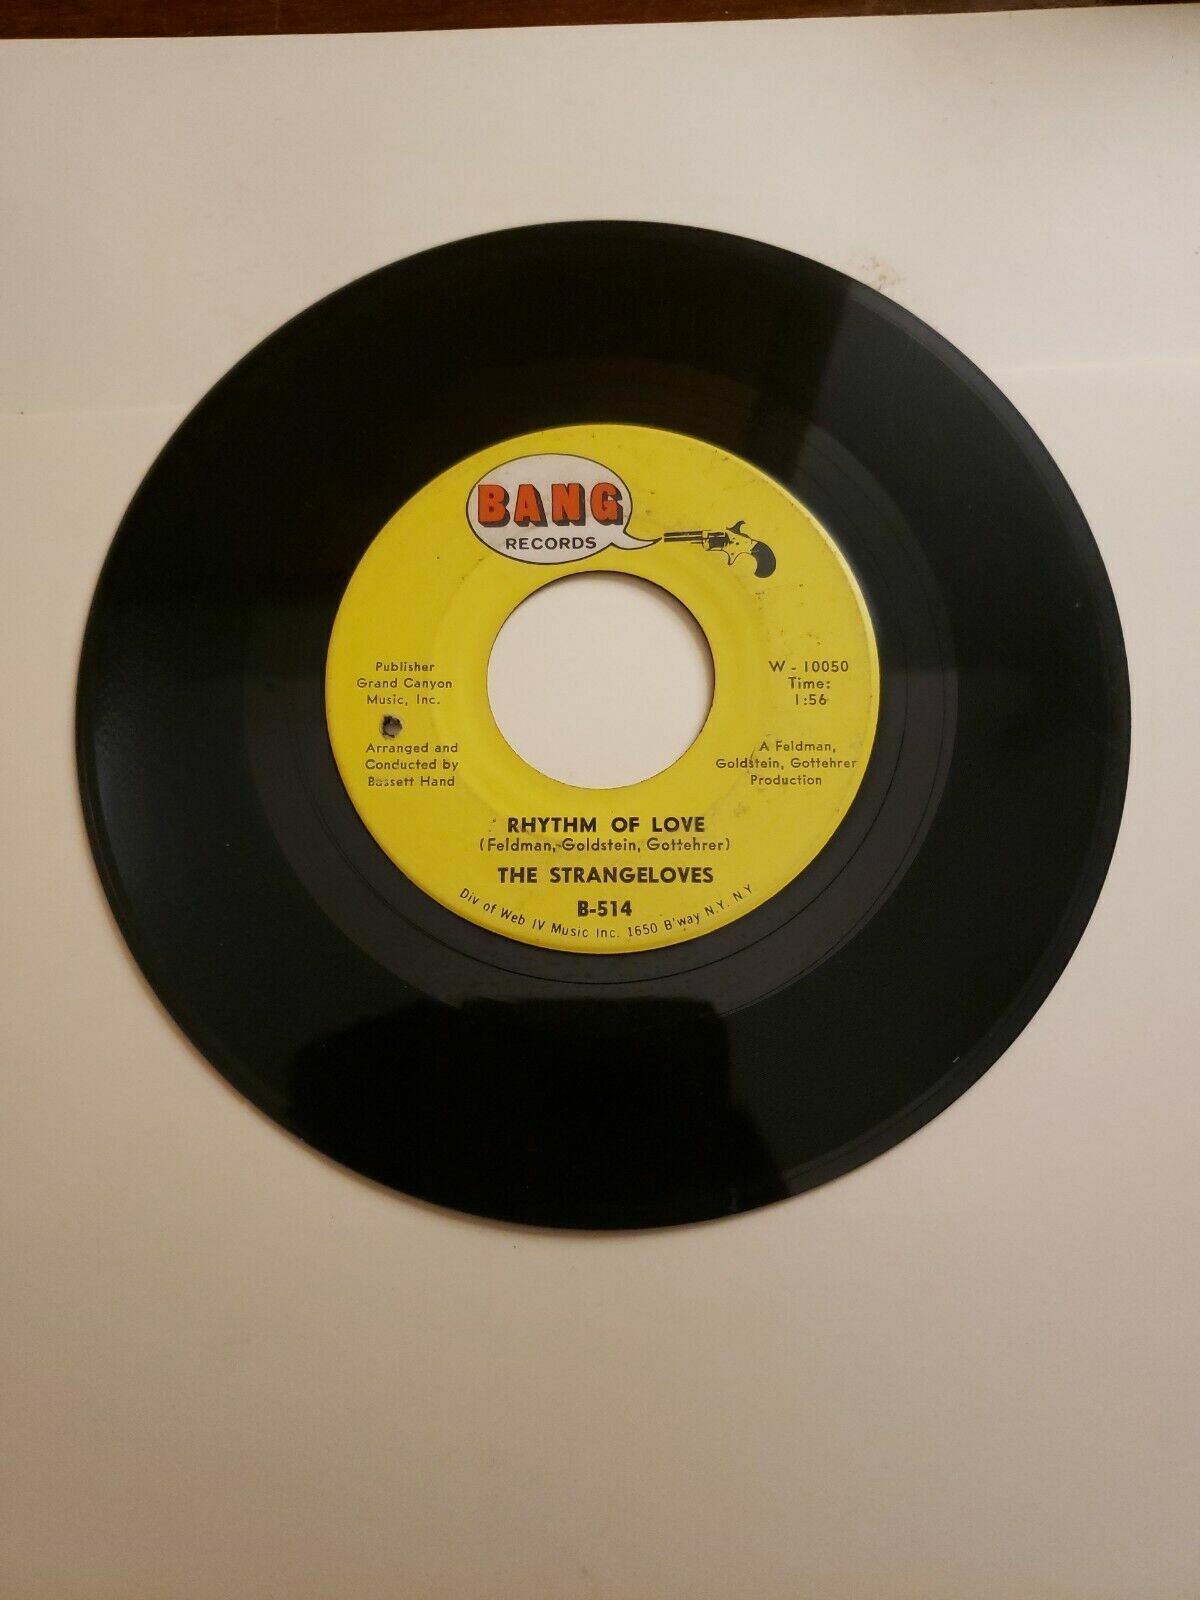 The Strangeloves - Rhythm of Love - Bang (45RPM 7”Single)(J814) 